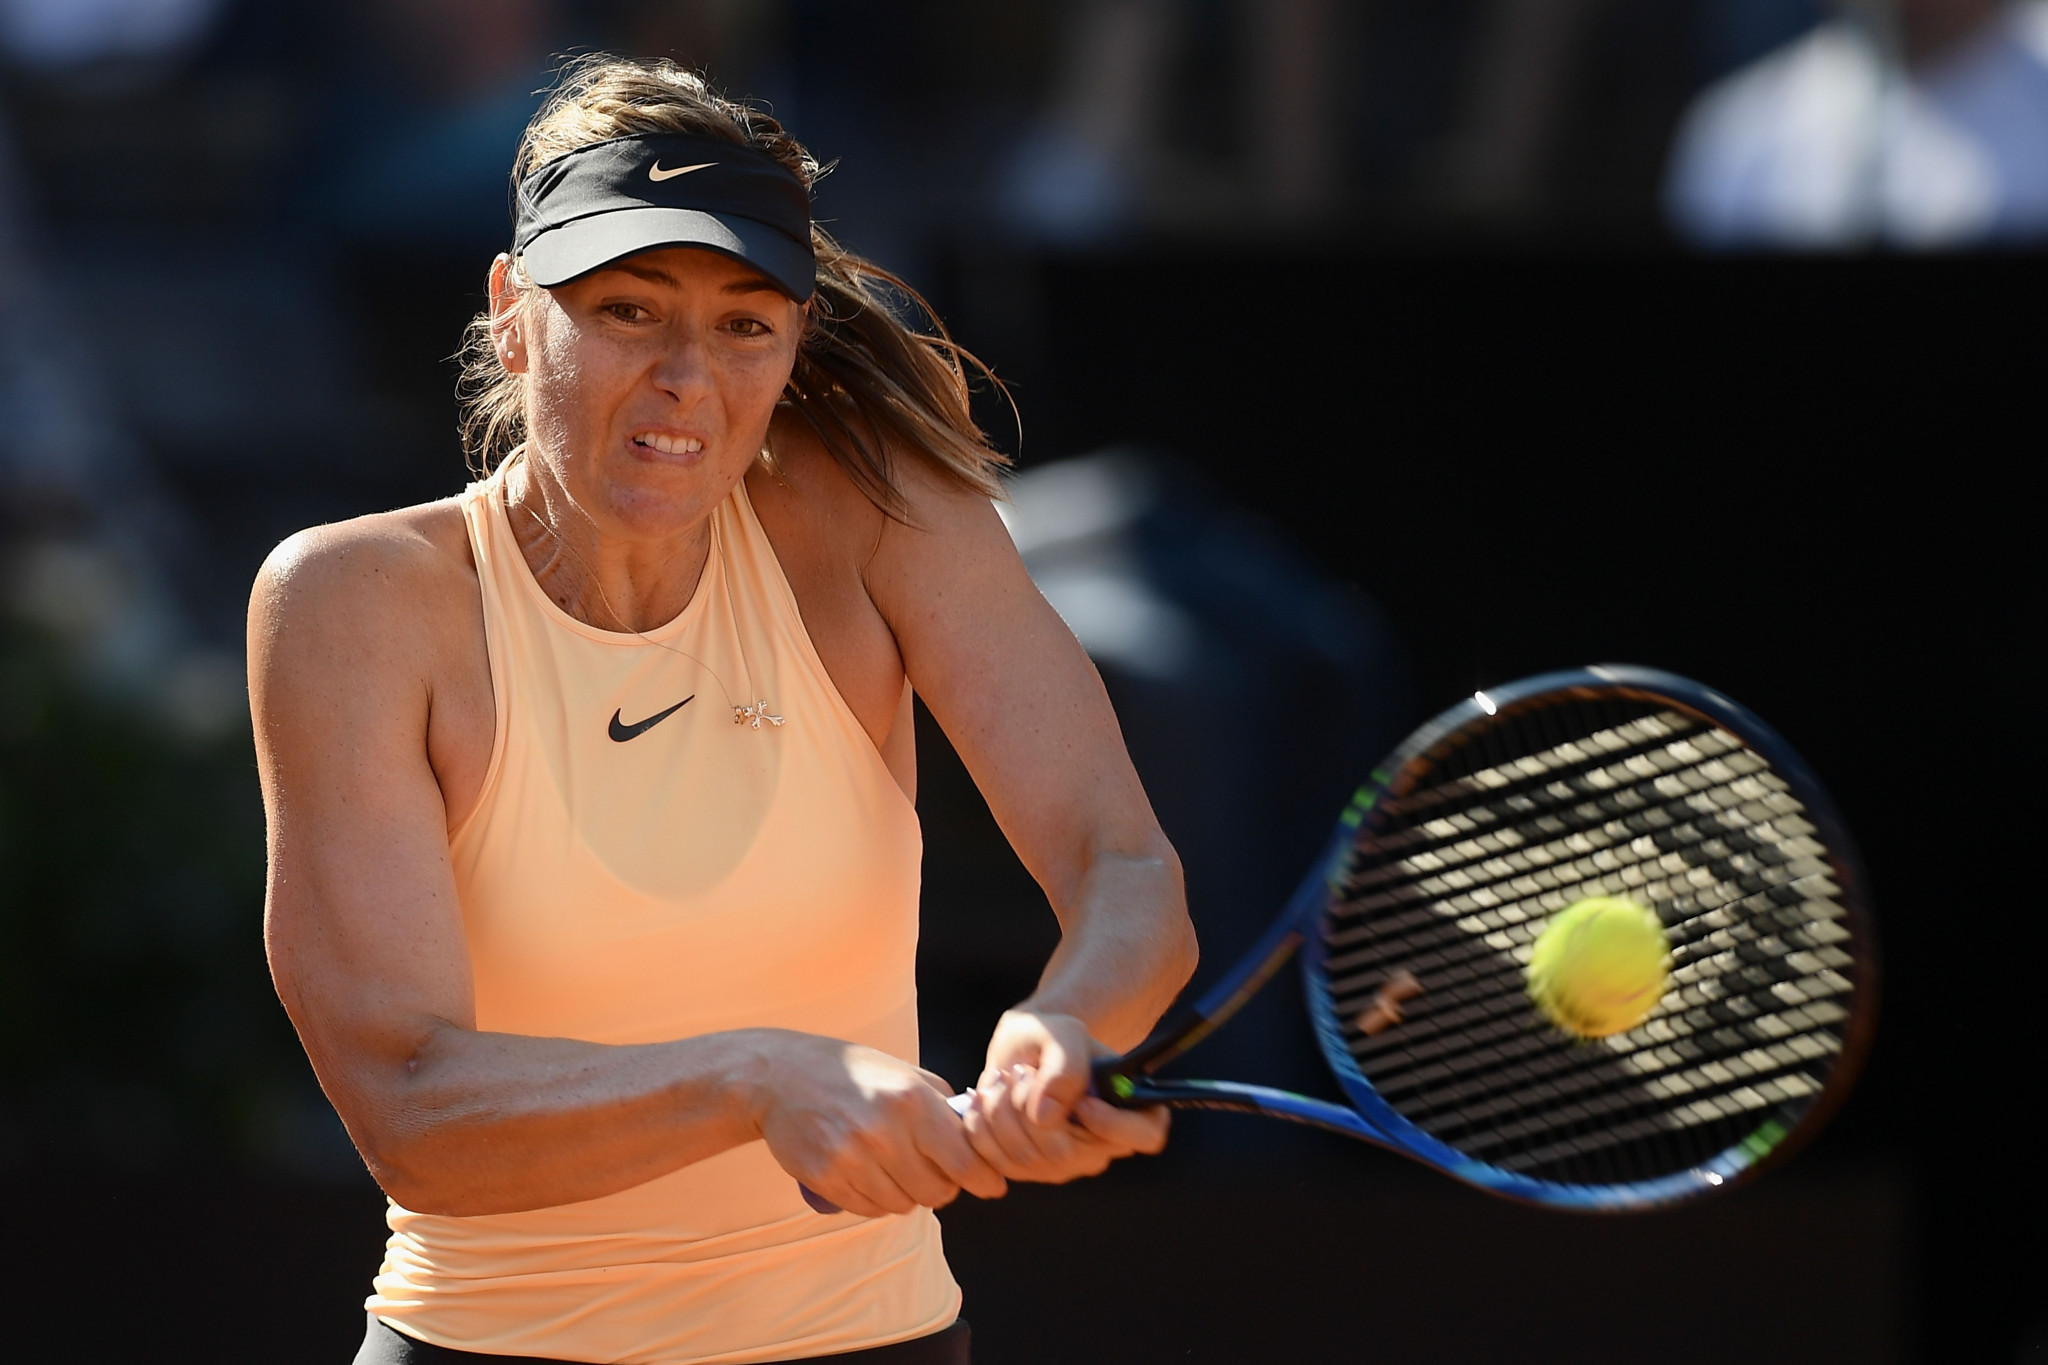 Maria Sharapova came through a tough match to earn a semi-final spot ©Getty Images